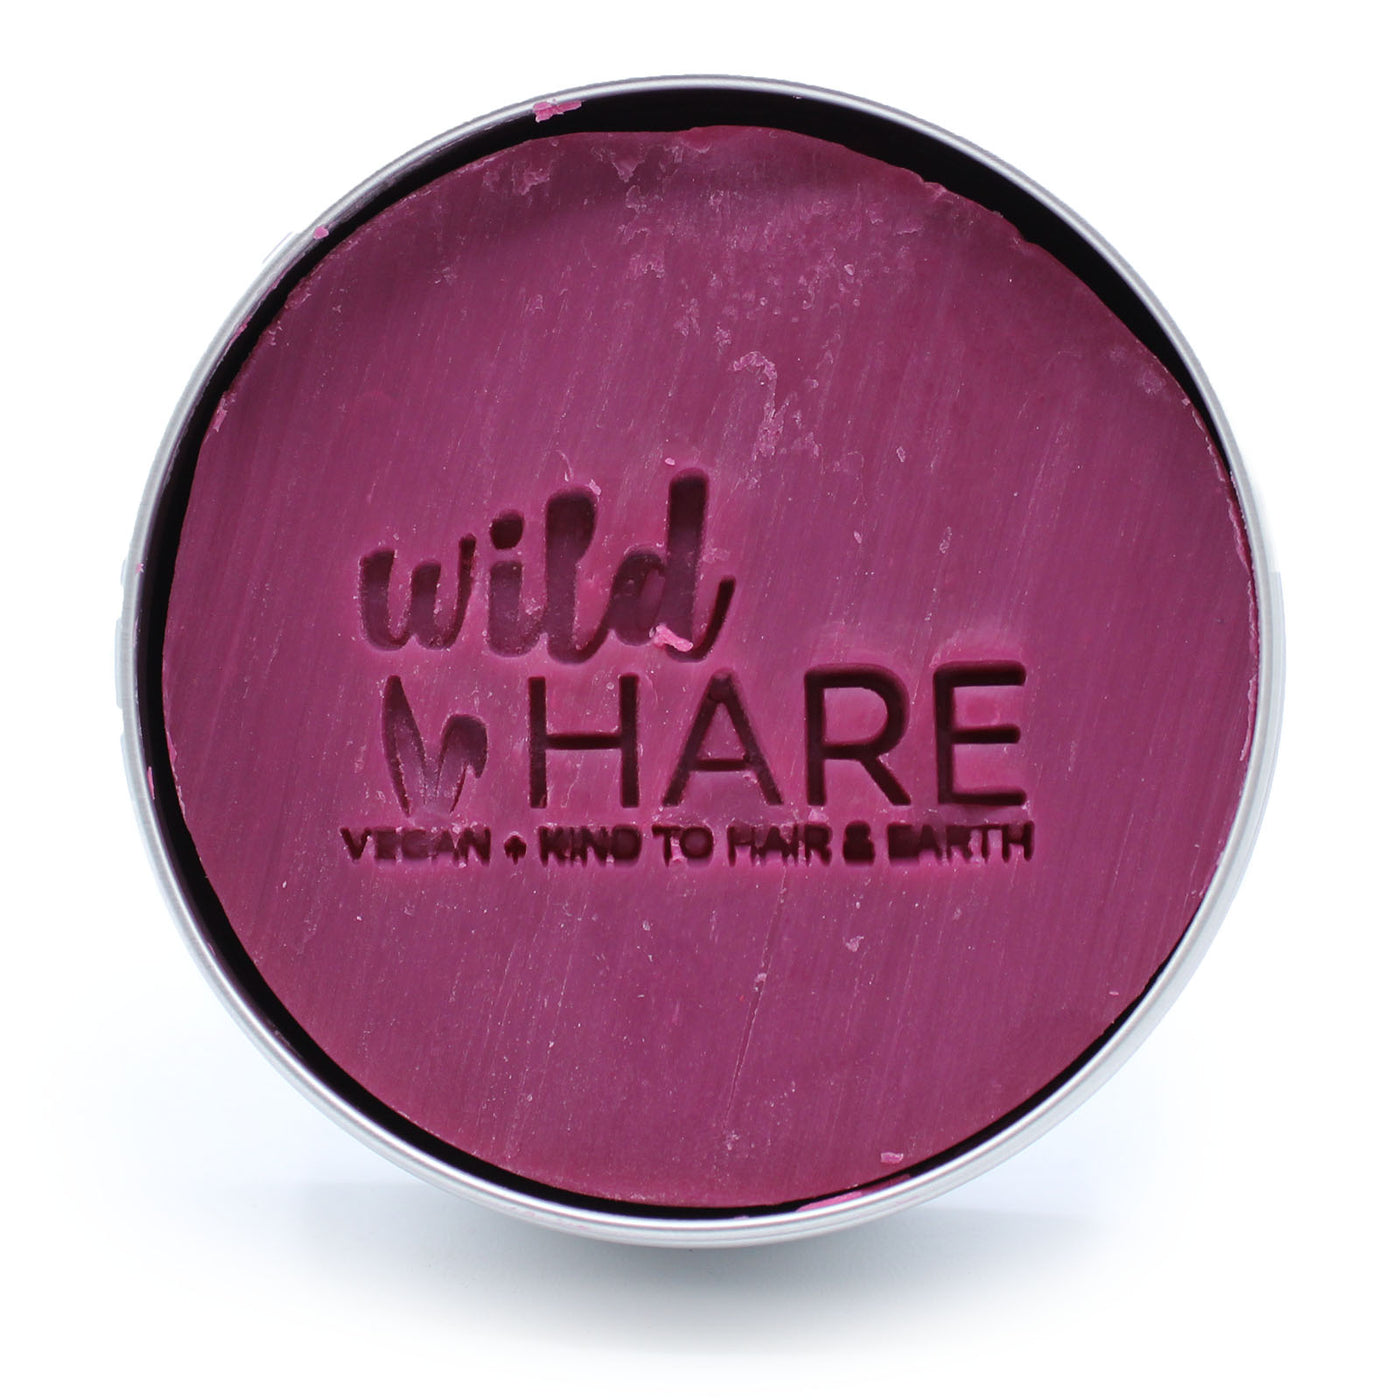 Wild Hare Paraben Free Solid Shampoo 60g – Cherry Bonbon.